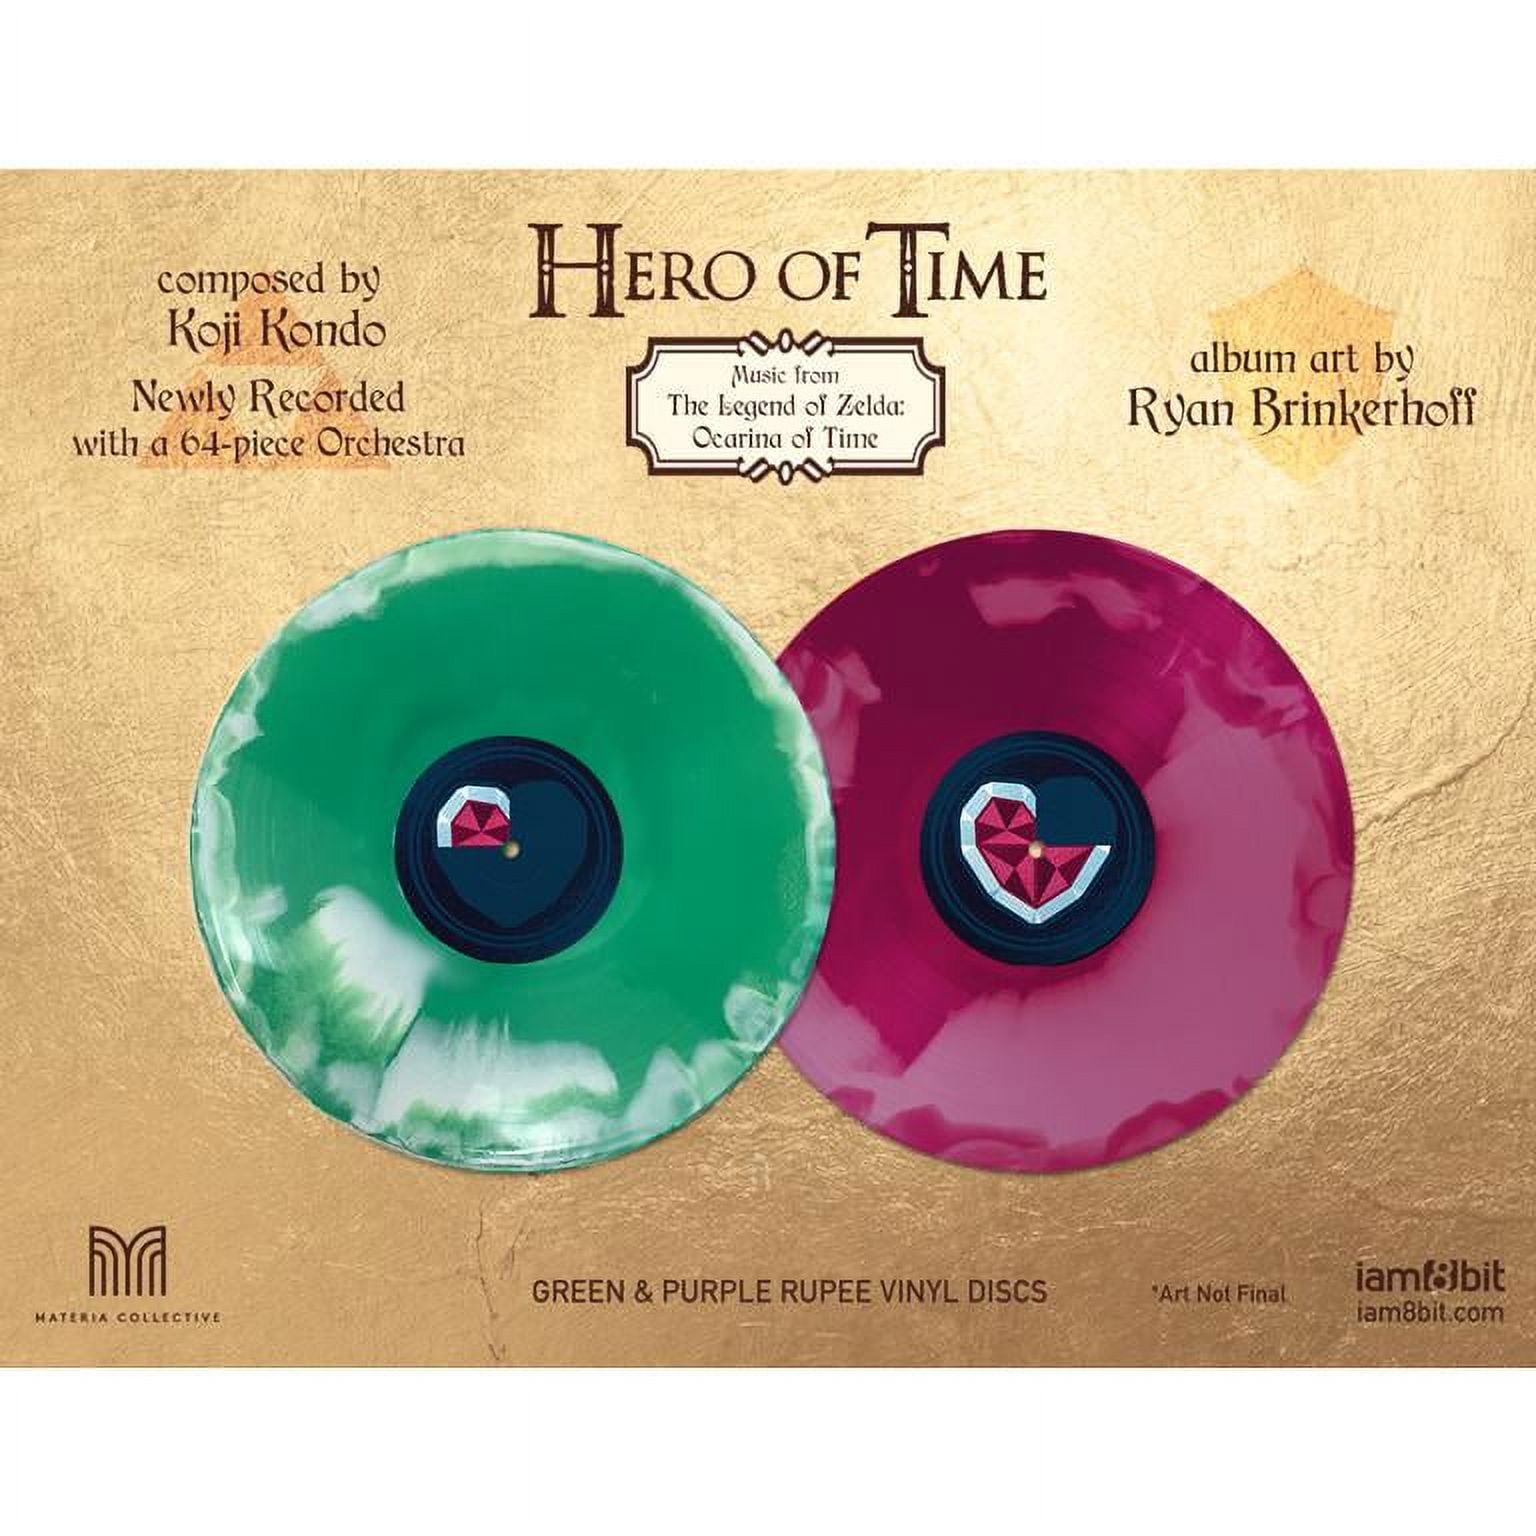 iam8bit  Hero of Time 2xLP Vinyl Soundtrack (Music from The Legend of Zelda:  Ocarina of Time) - iam8bit